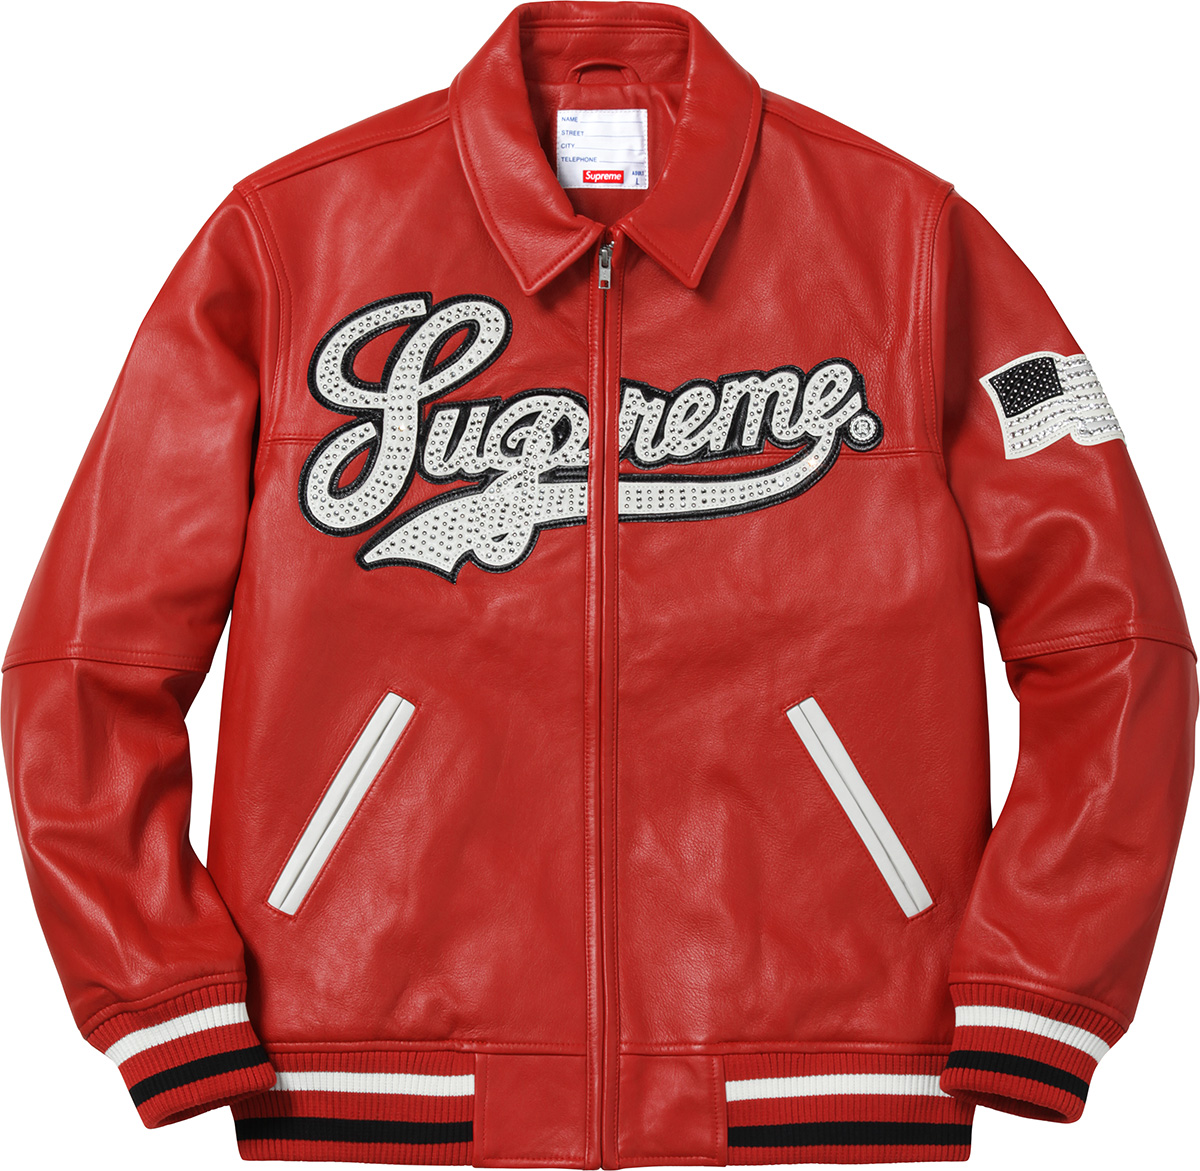 Supreme Uptown Studded Leather Varsity Jacket Red - SS16 Men's - US